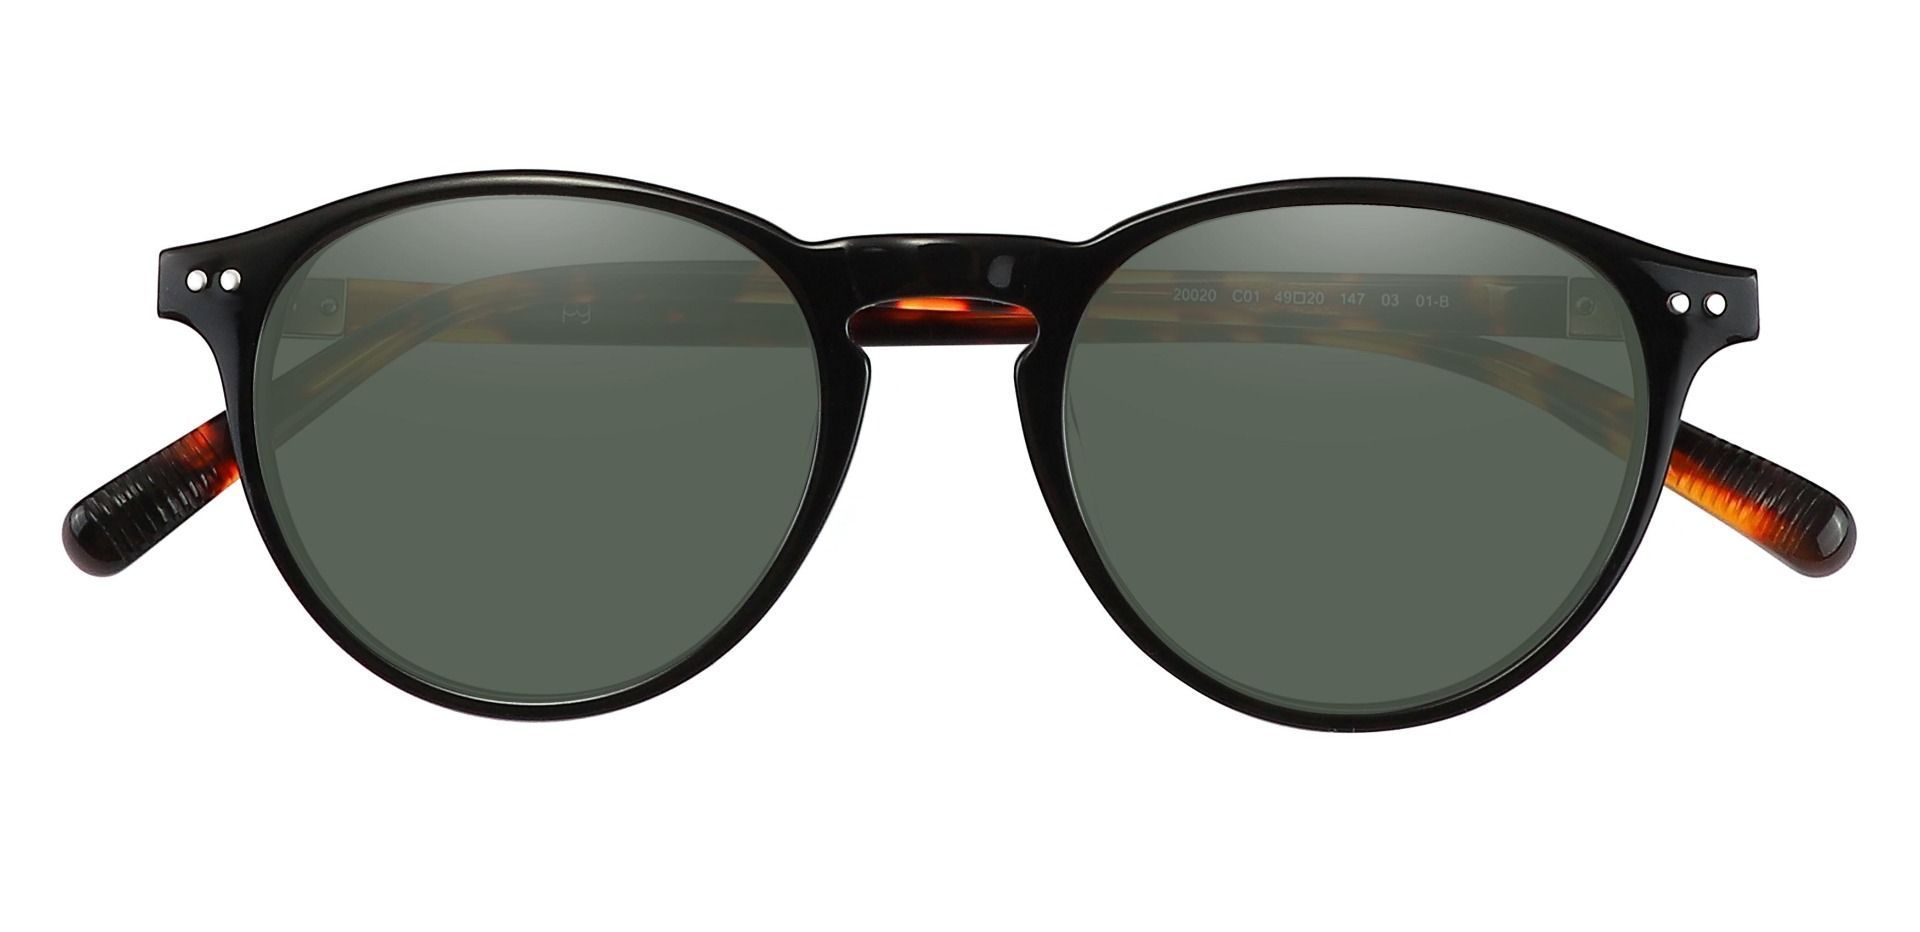 Monarch Oval Progressive Sunglasses - Black Frame With Green Lenses